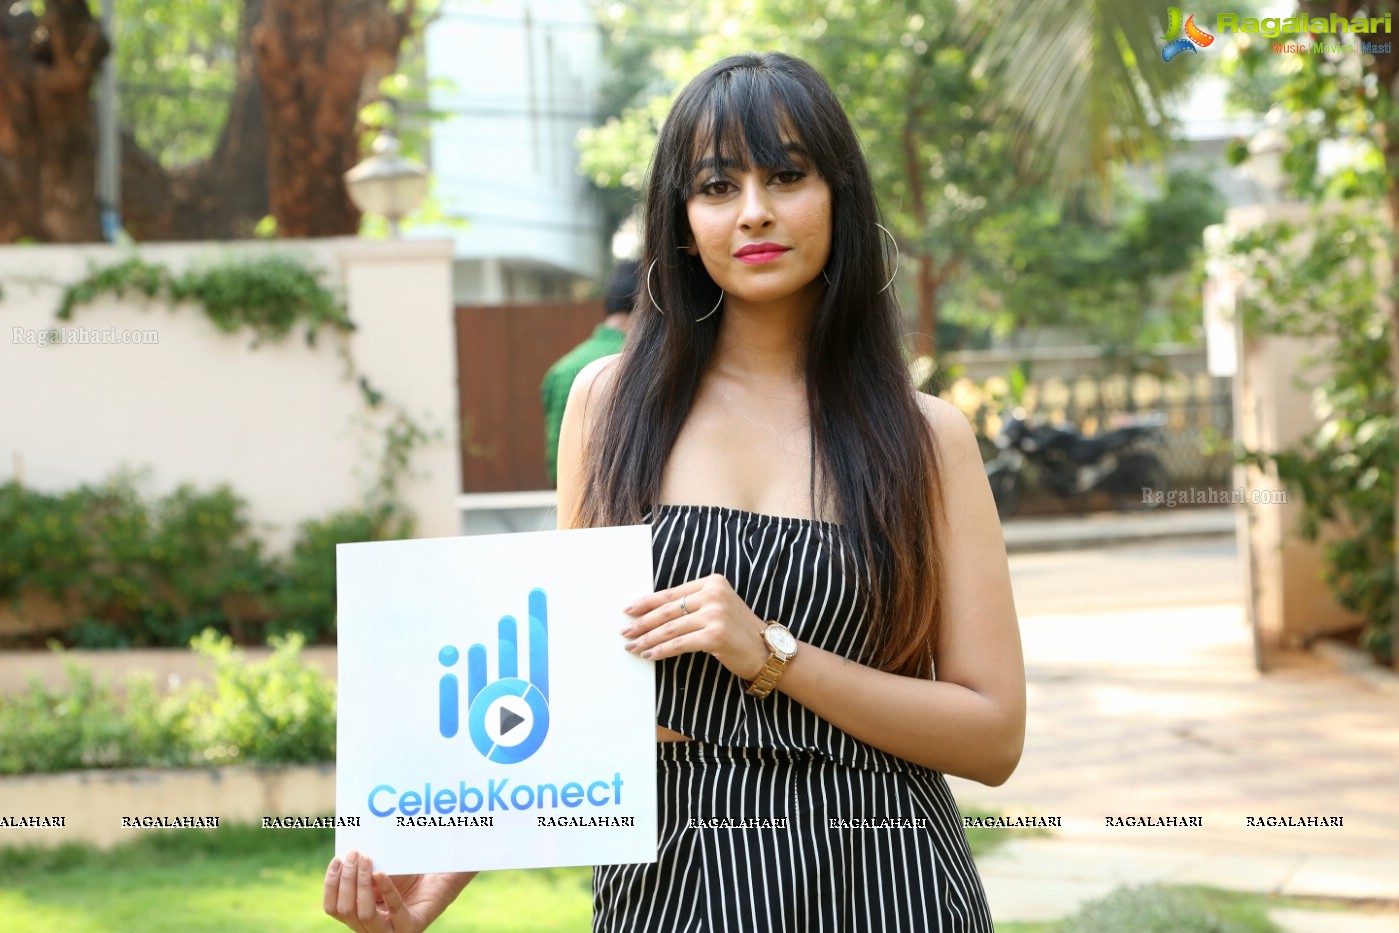 Ameeksha Amy Pawar at Celeb Konnect Mobile App Launch (Posters)